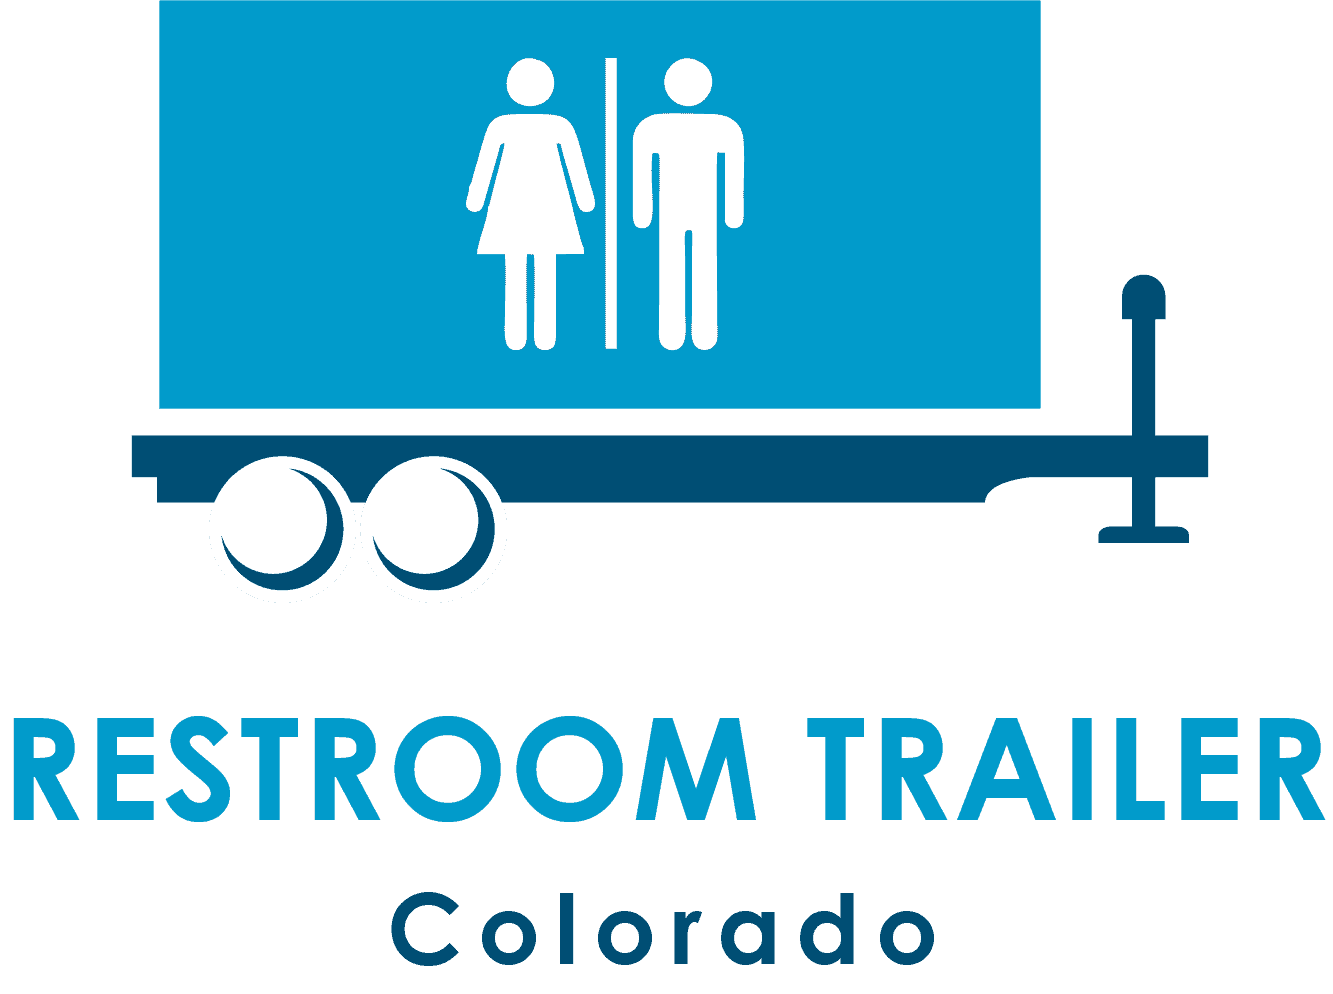 Restroom Trailer Colorado Logo - Portable restroom trailer sign with gender icons.